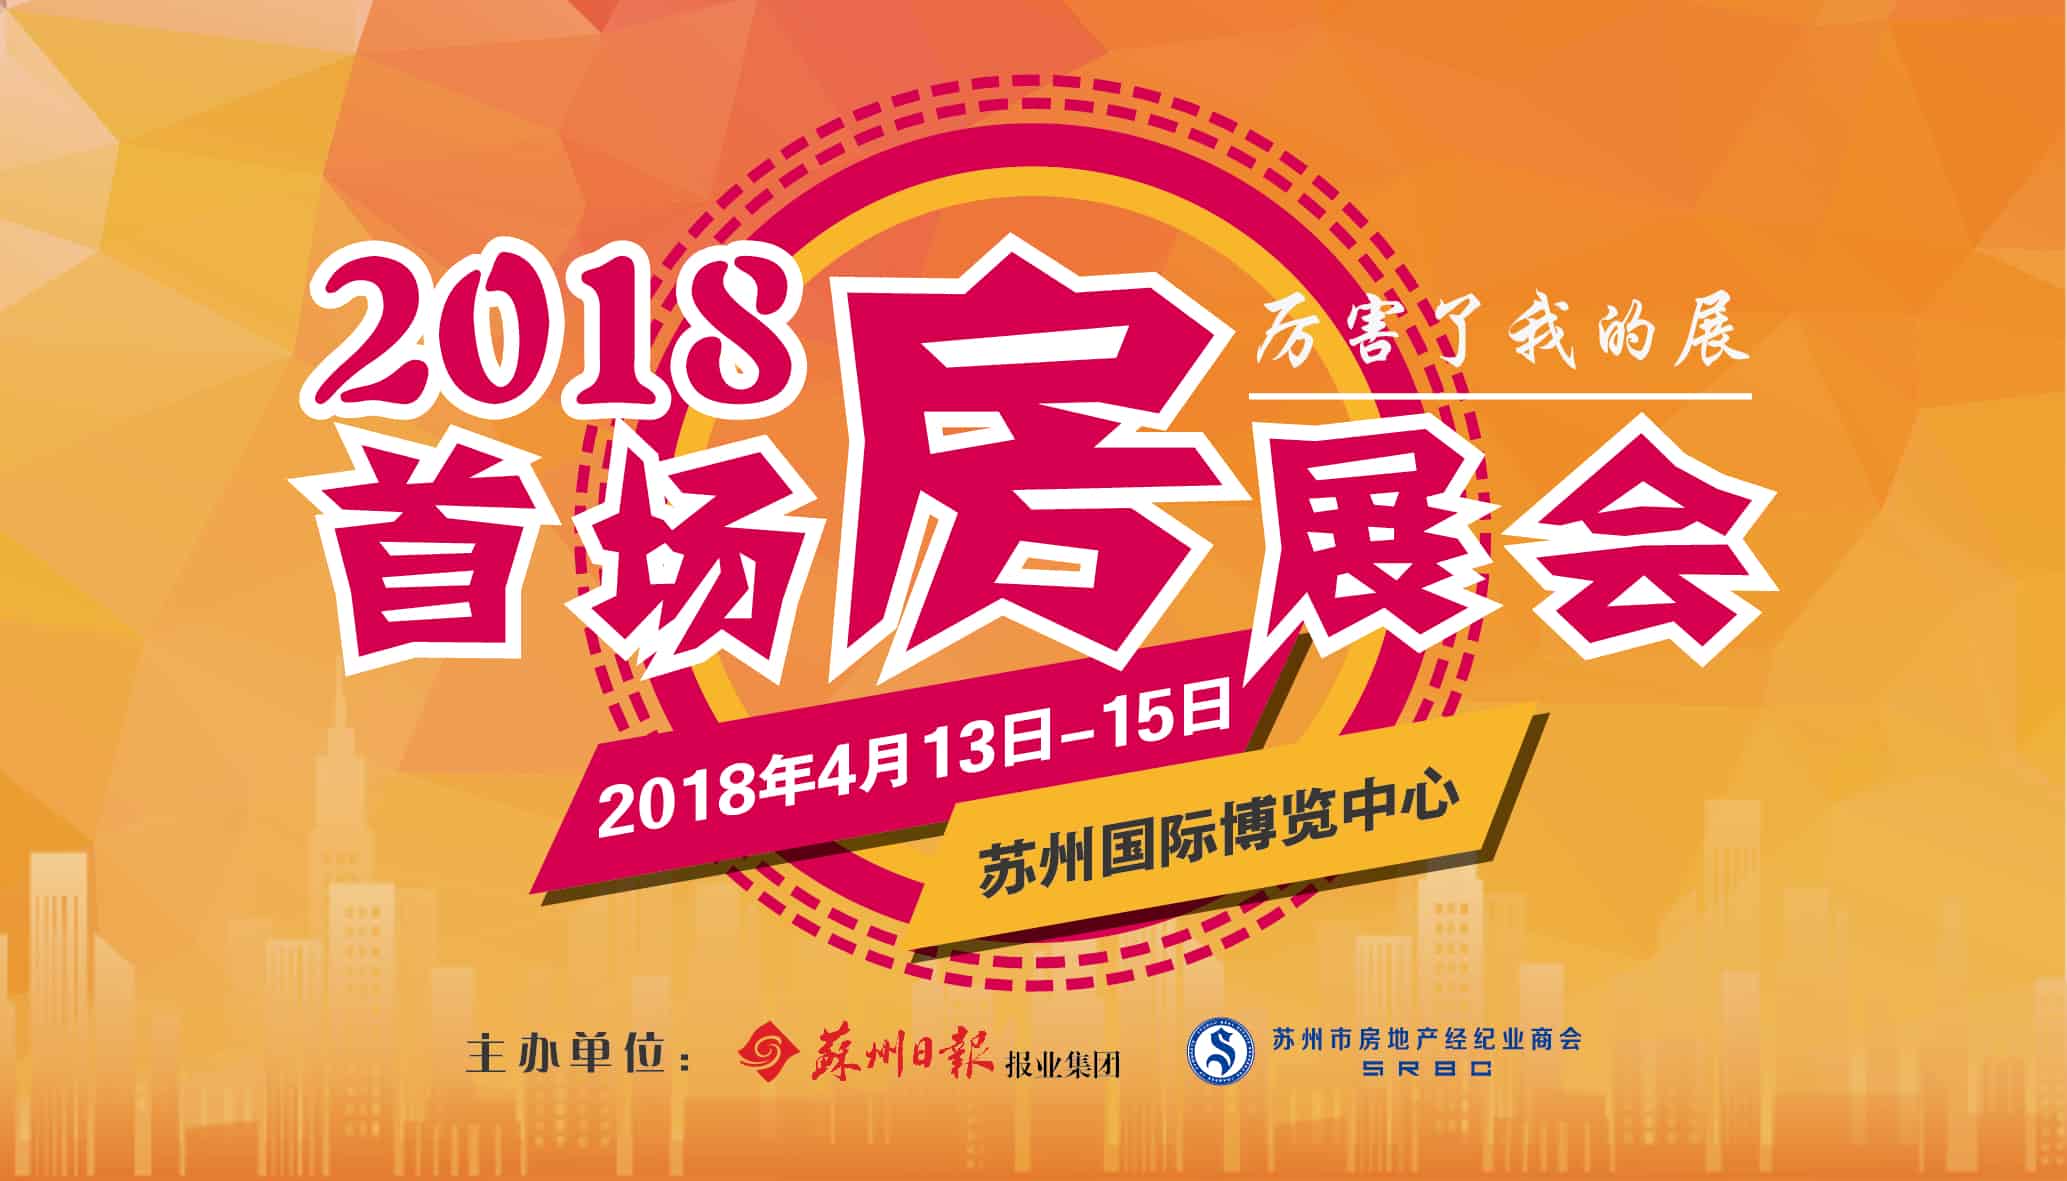 Suzhou Spring International Property & Investment Expo 2018